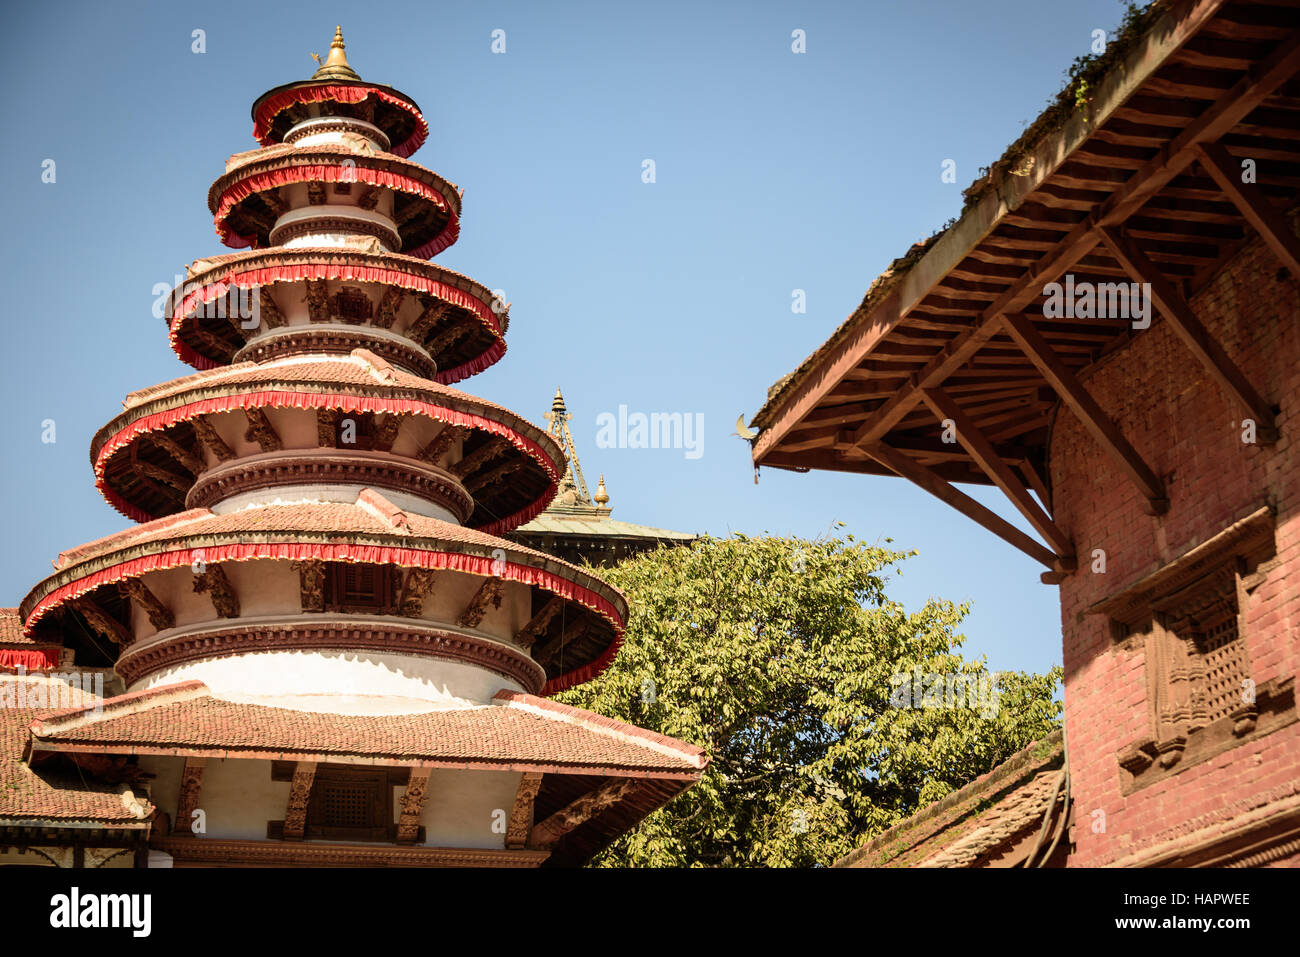 Palace tower in Kathmandu Durbar square Stock Photo